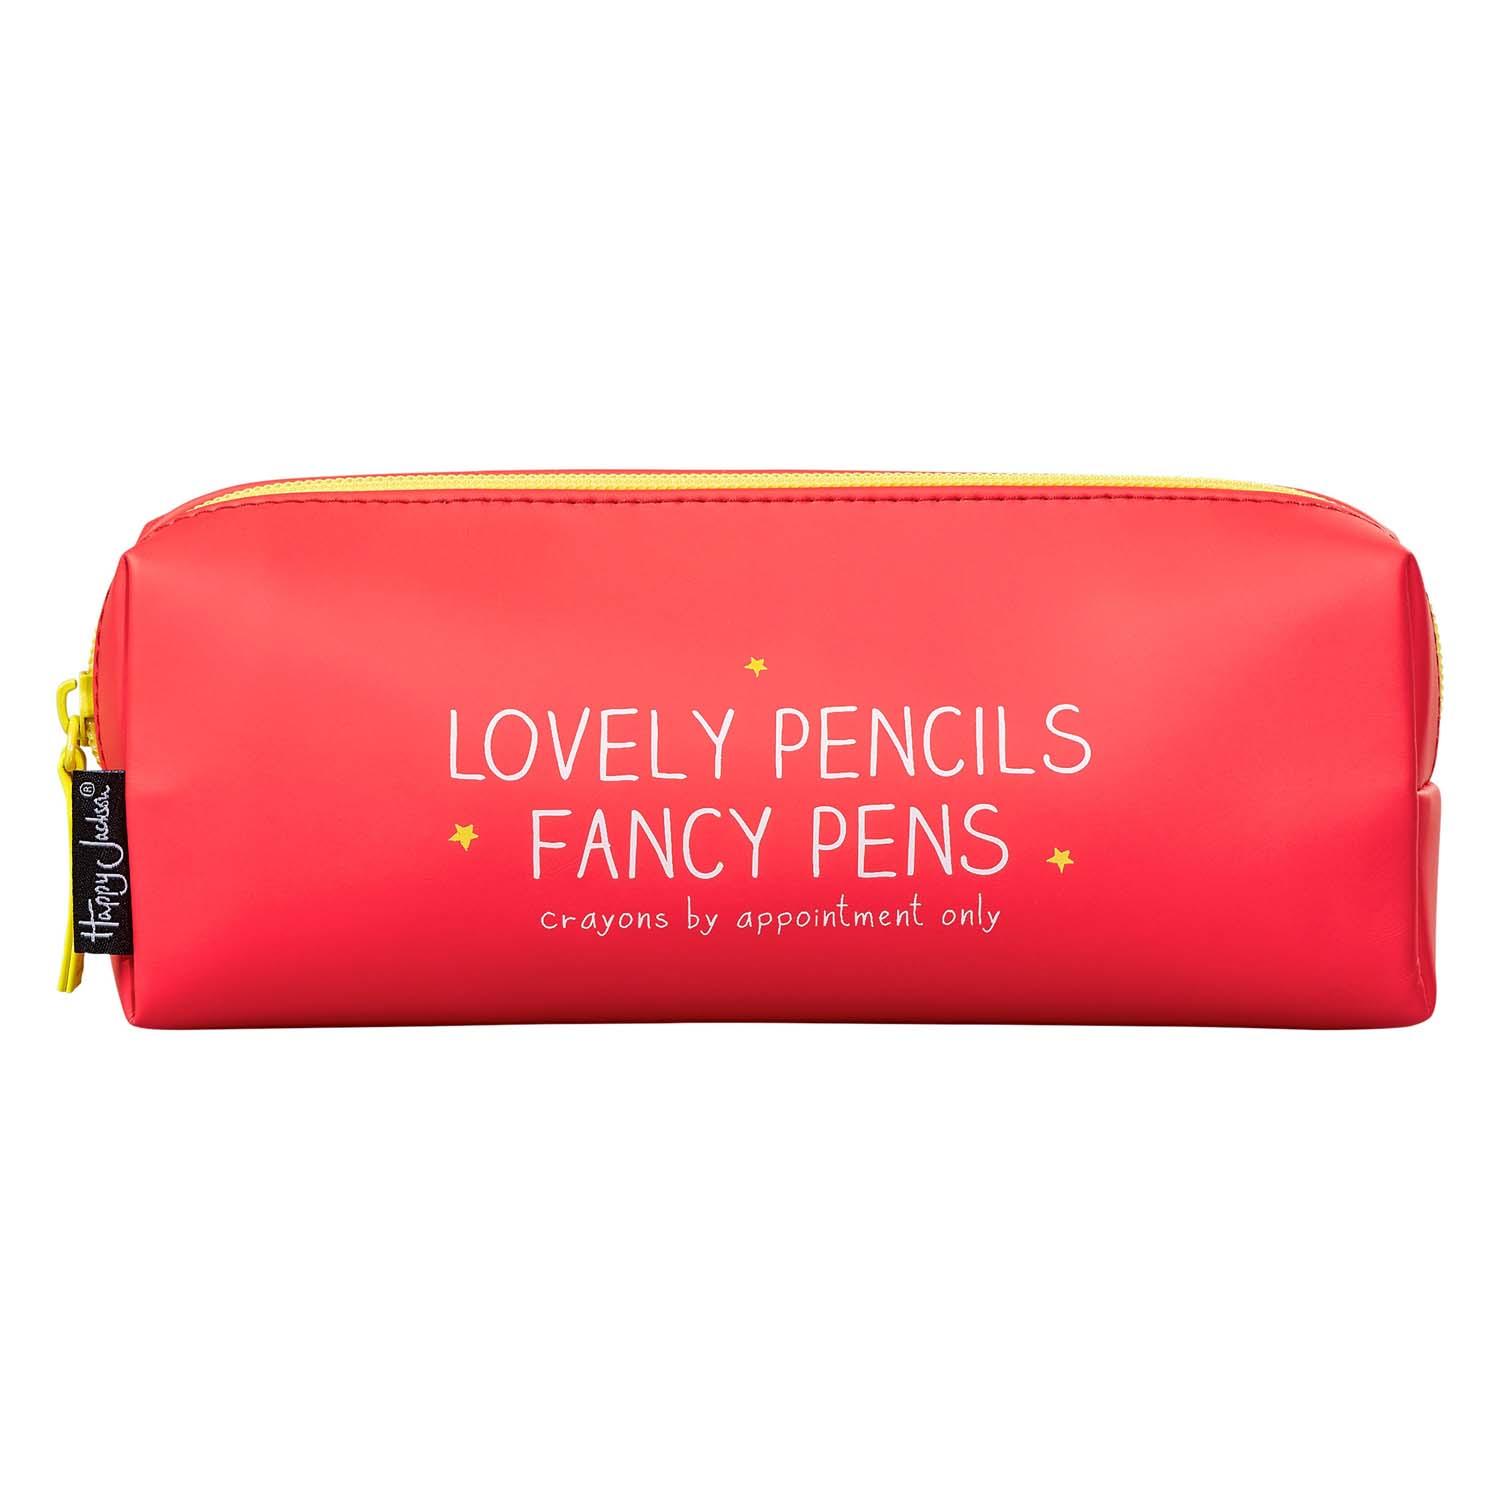 Futrola za olovke LOVELY PENCILS 